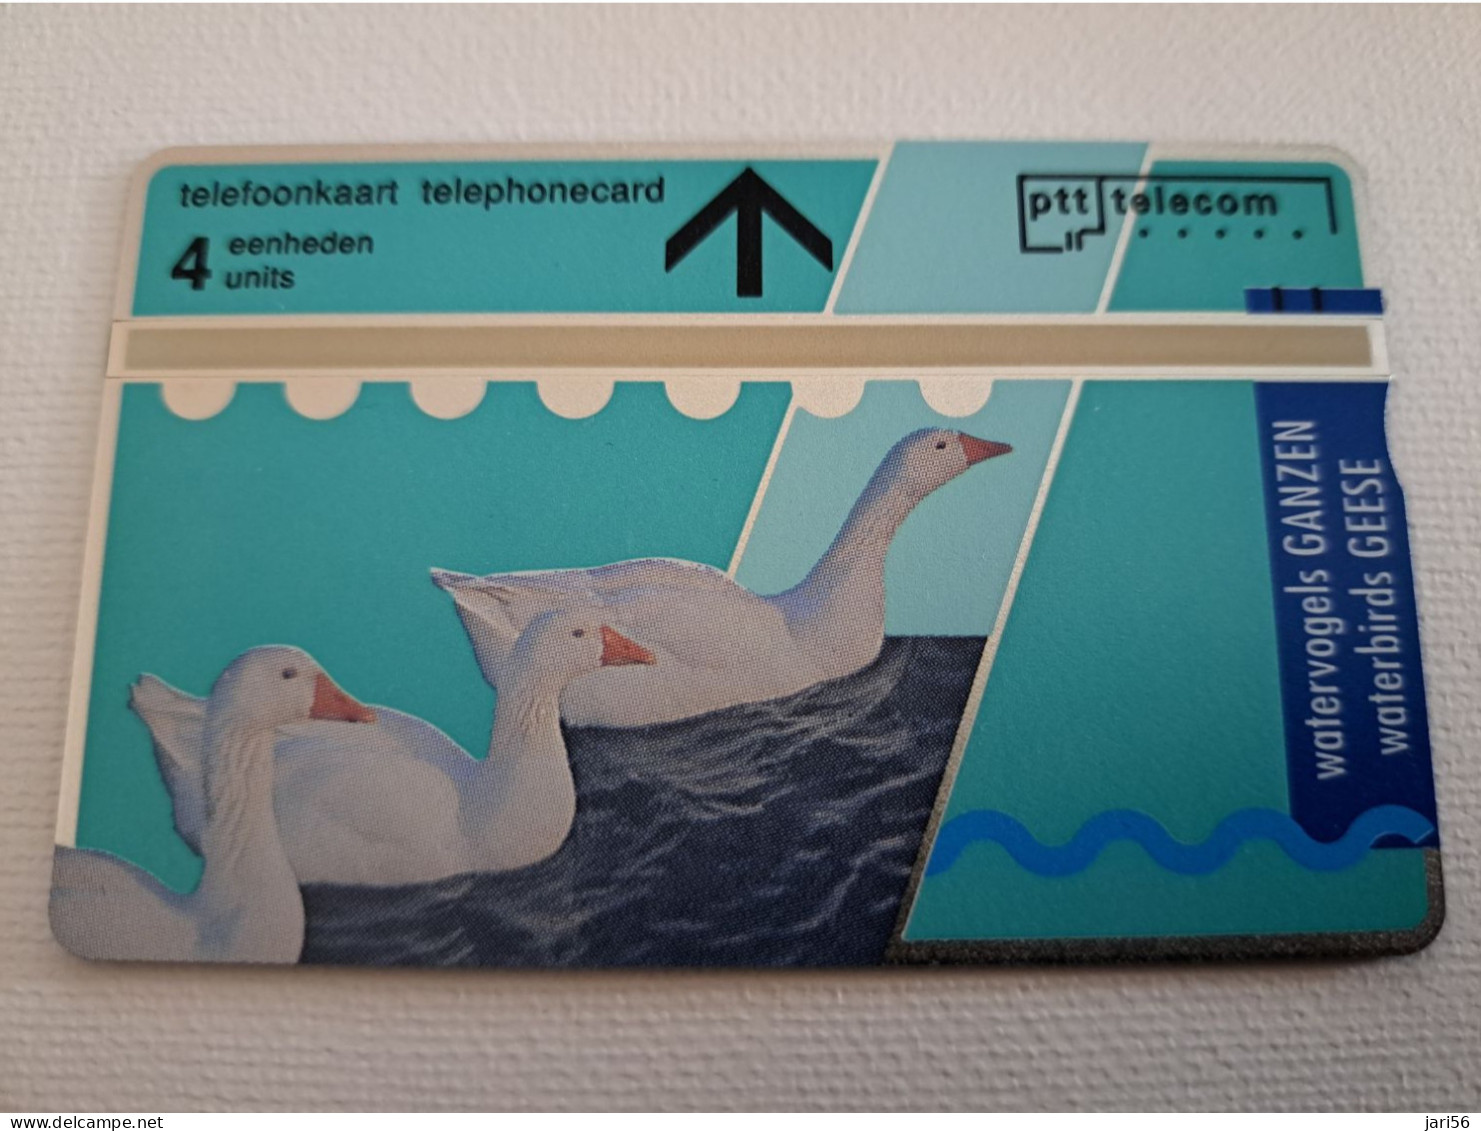 NETHERLANDS  L&G CARDS SERIE SWANS/ BIRDS  3X  R008/01-03 TELE ART    /  MINT   ** 16589** - Openbaar